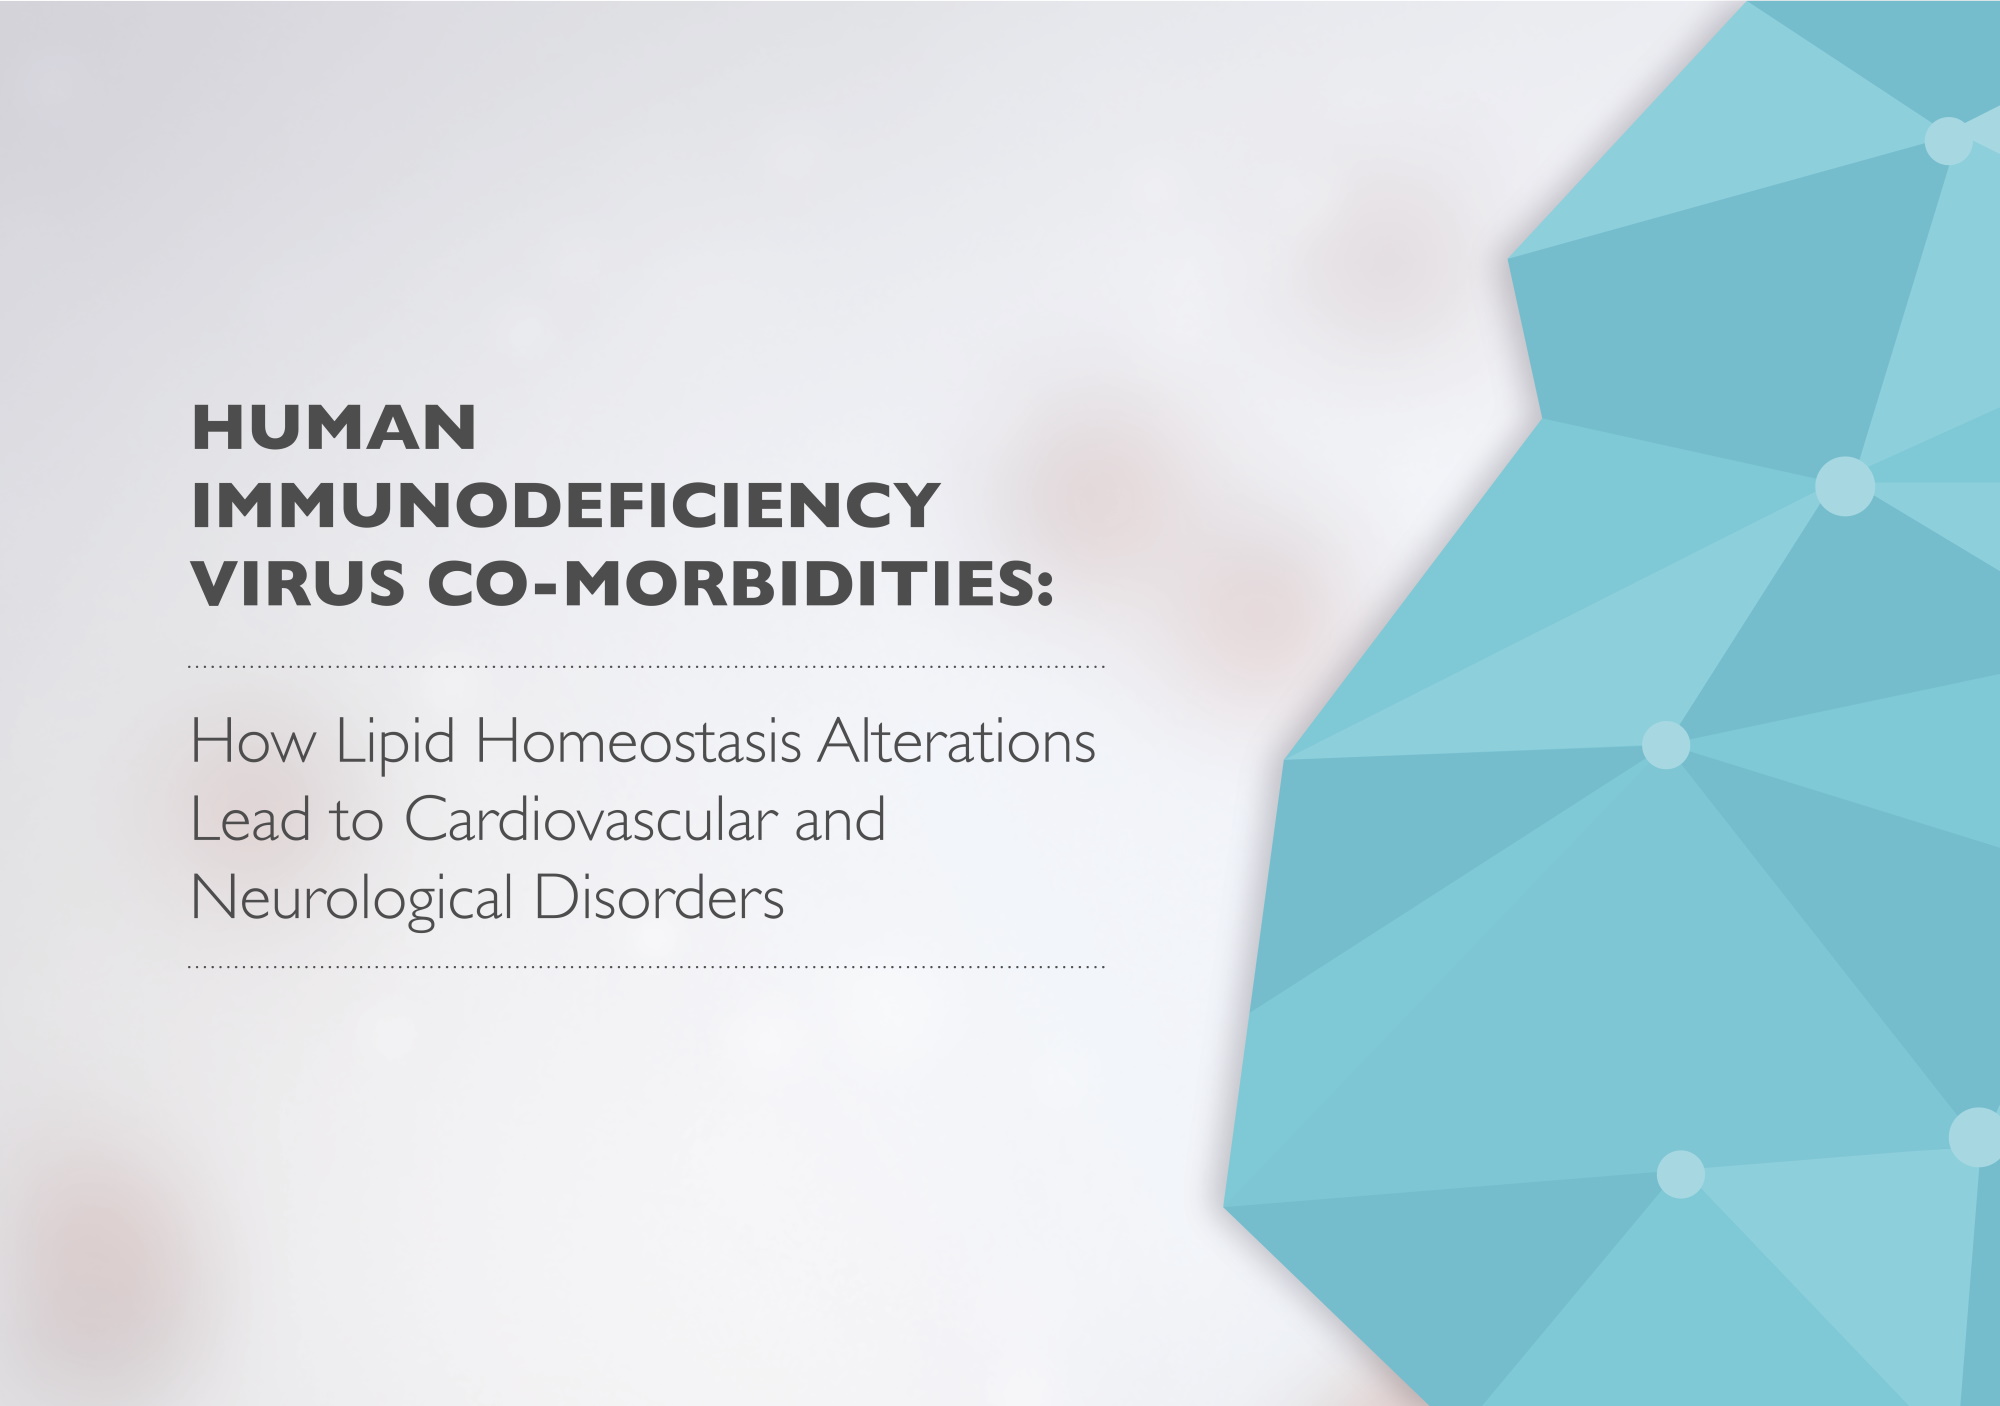 Professor Michael Bukrinsky | Human Immunodeficiency Virus Co-morbidities: How Lipid Homeostasis Alterations Lead to Cardiovascular and Neurological Disorders